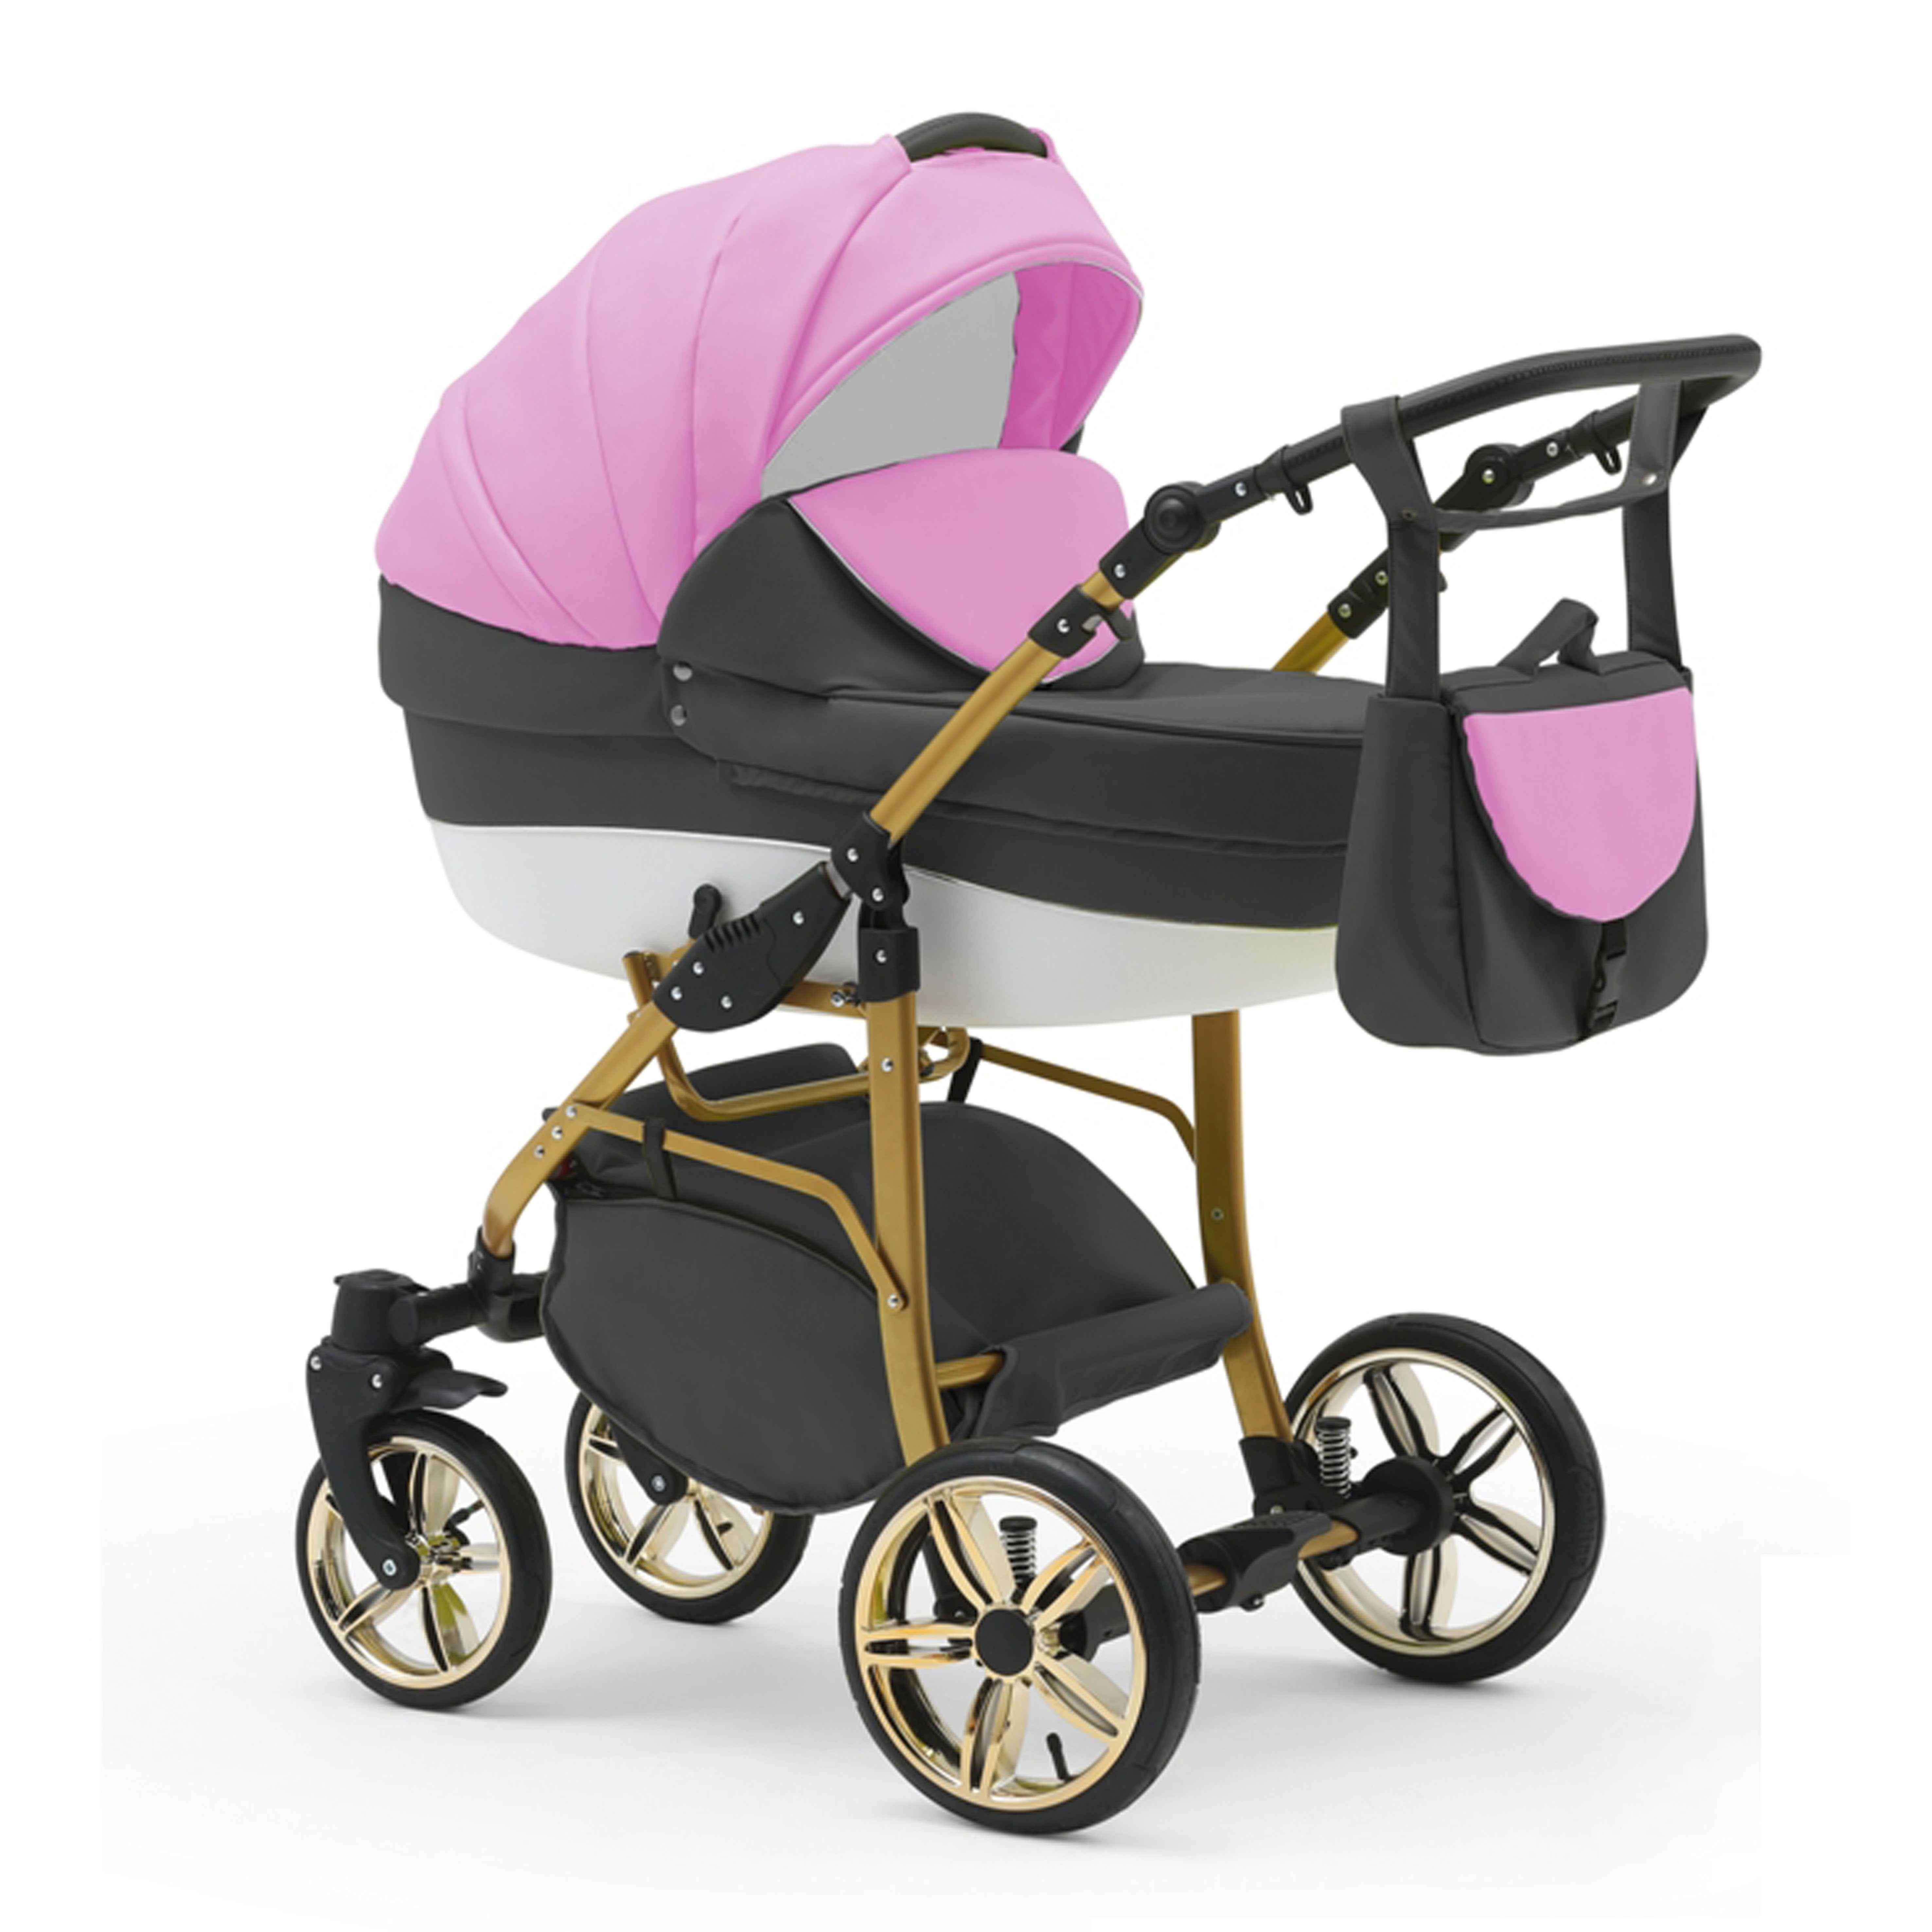 Farben Pink-Grau-Weiß Gold Teile in - Cosmo 2 46 Kombi-Kinderwagen 1 13 in babies-on-wheels - Kinderwagen-Set